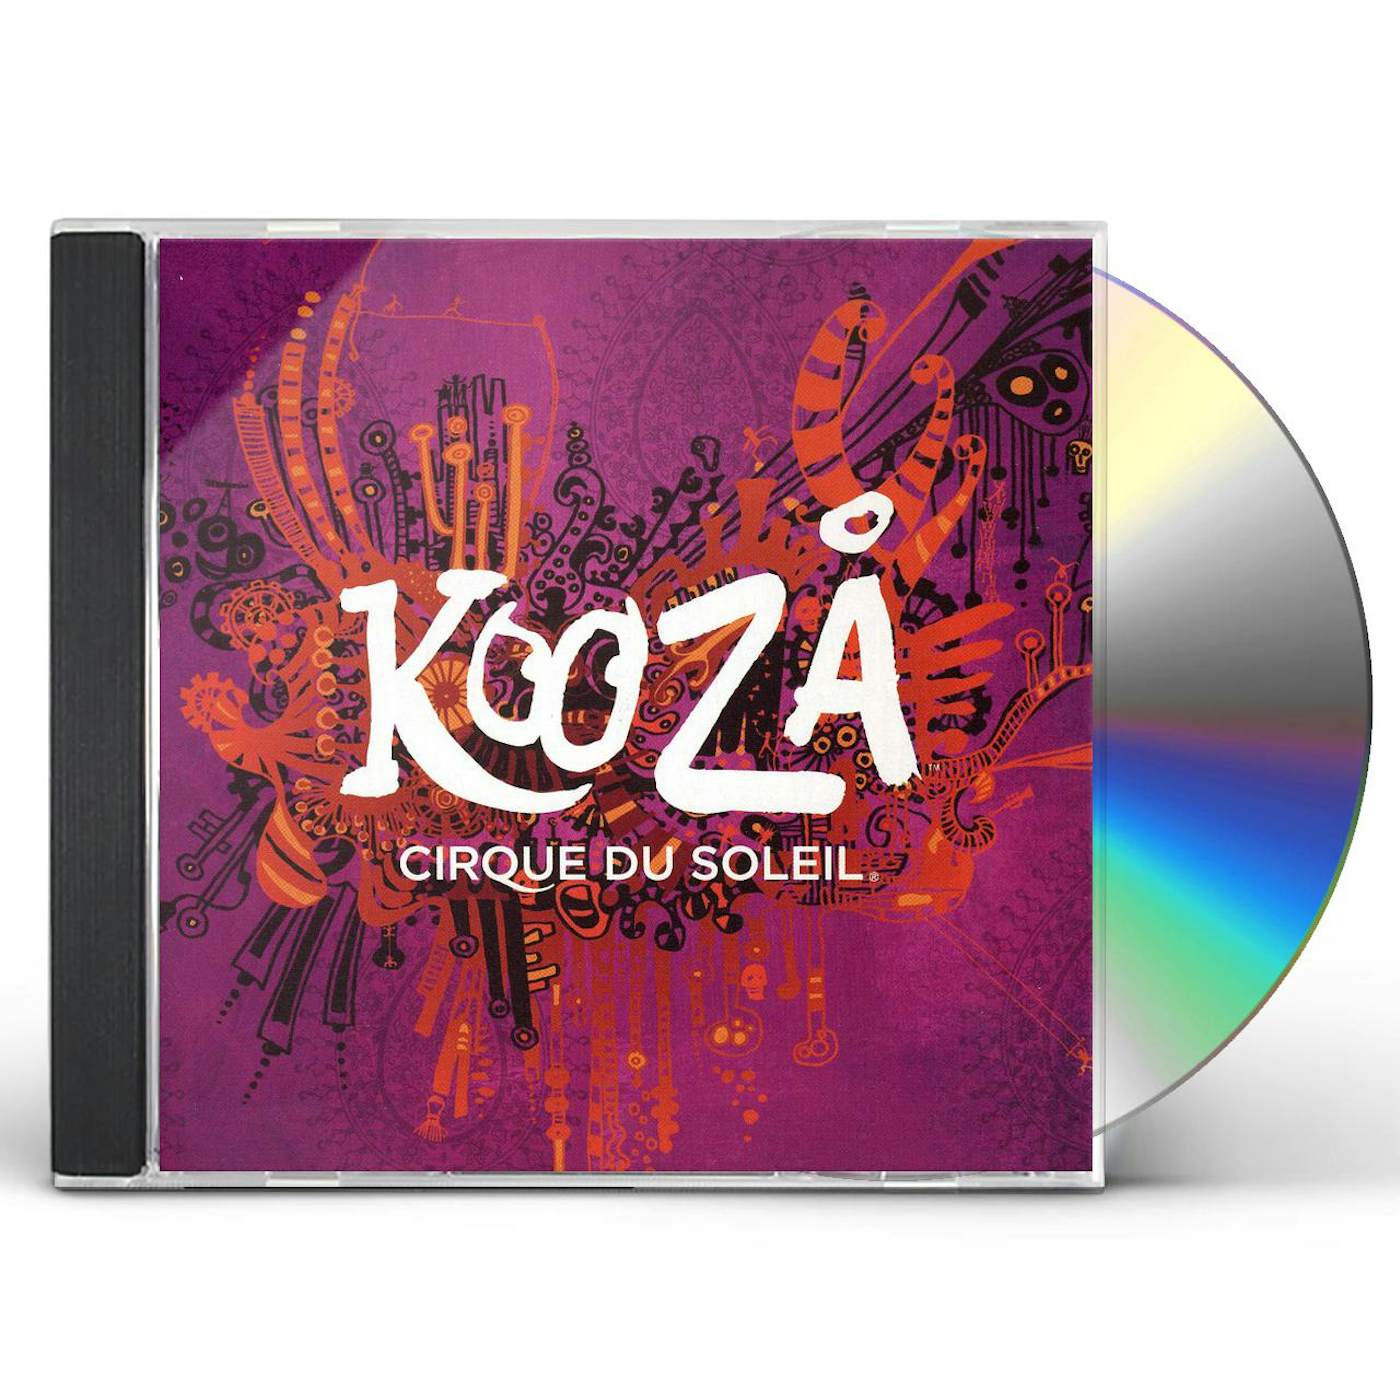 Cirque du Soleil KOOZA CD